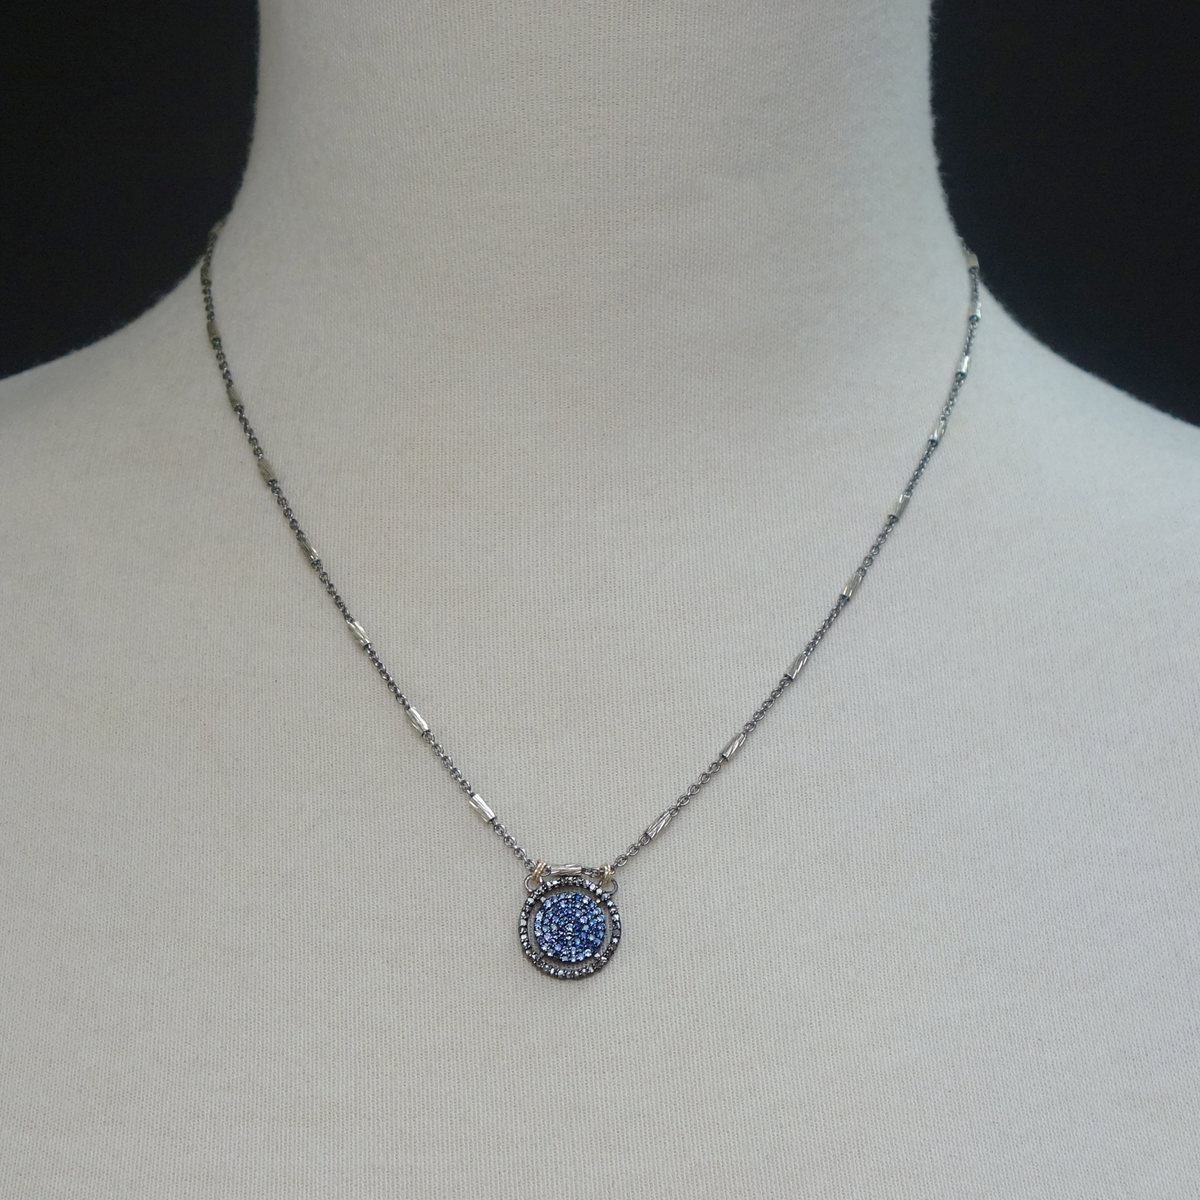 Pave diamond + blue sapphire necklace